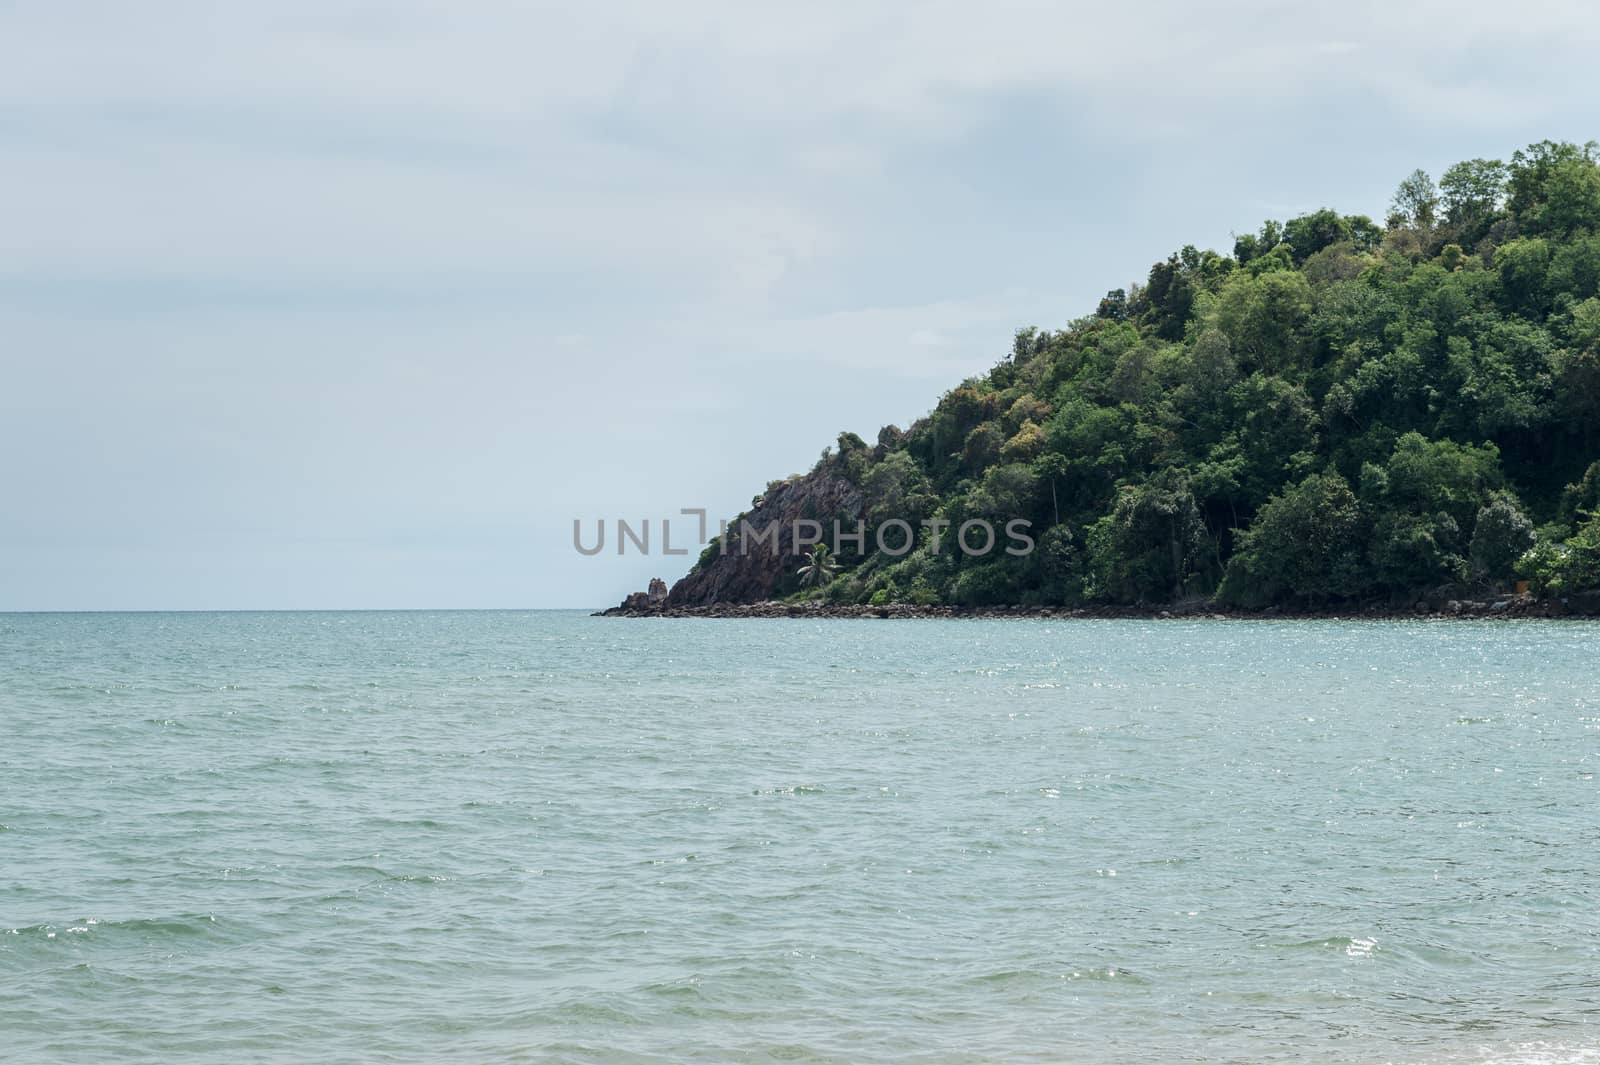 Closeup of island on the ocean landscape by sayhmog